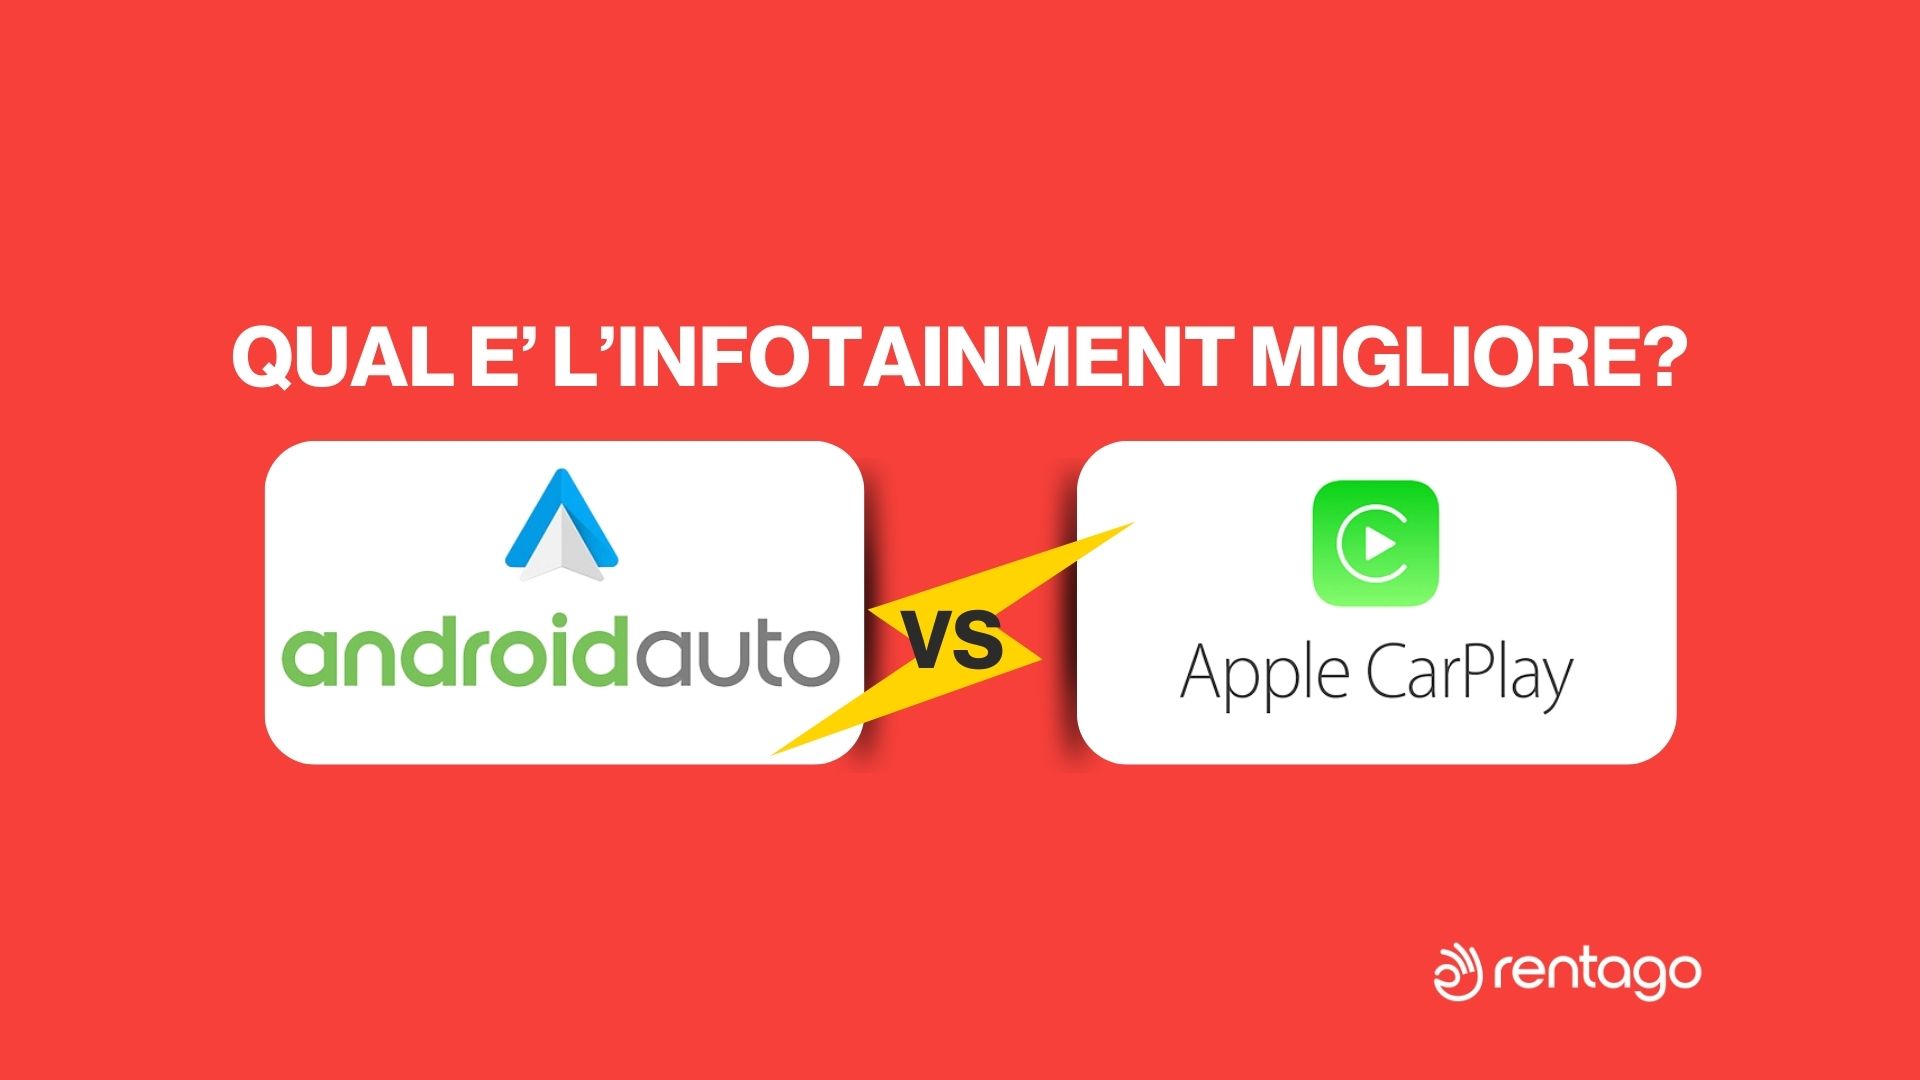 Apple CarPlay vs Android Auto